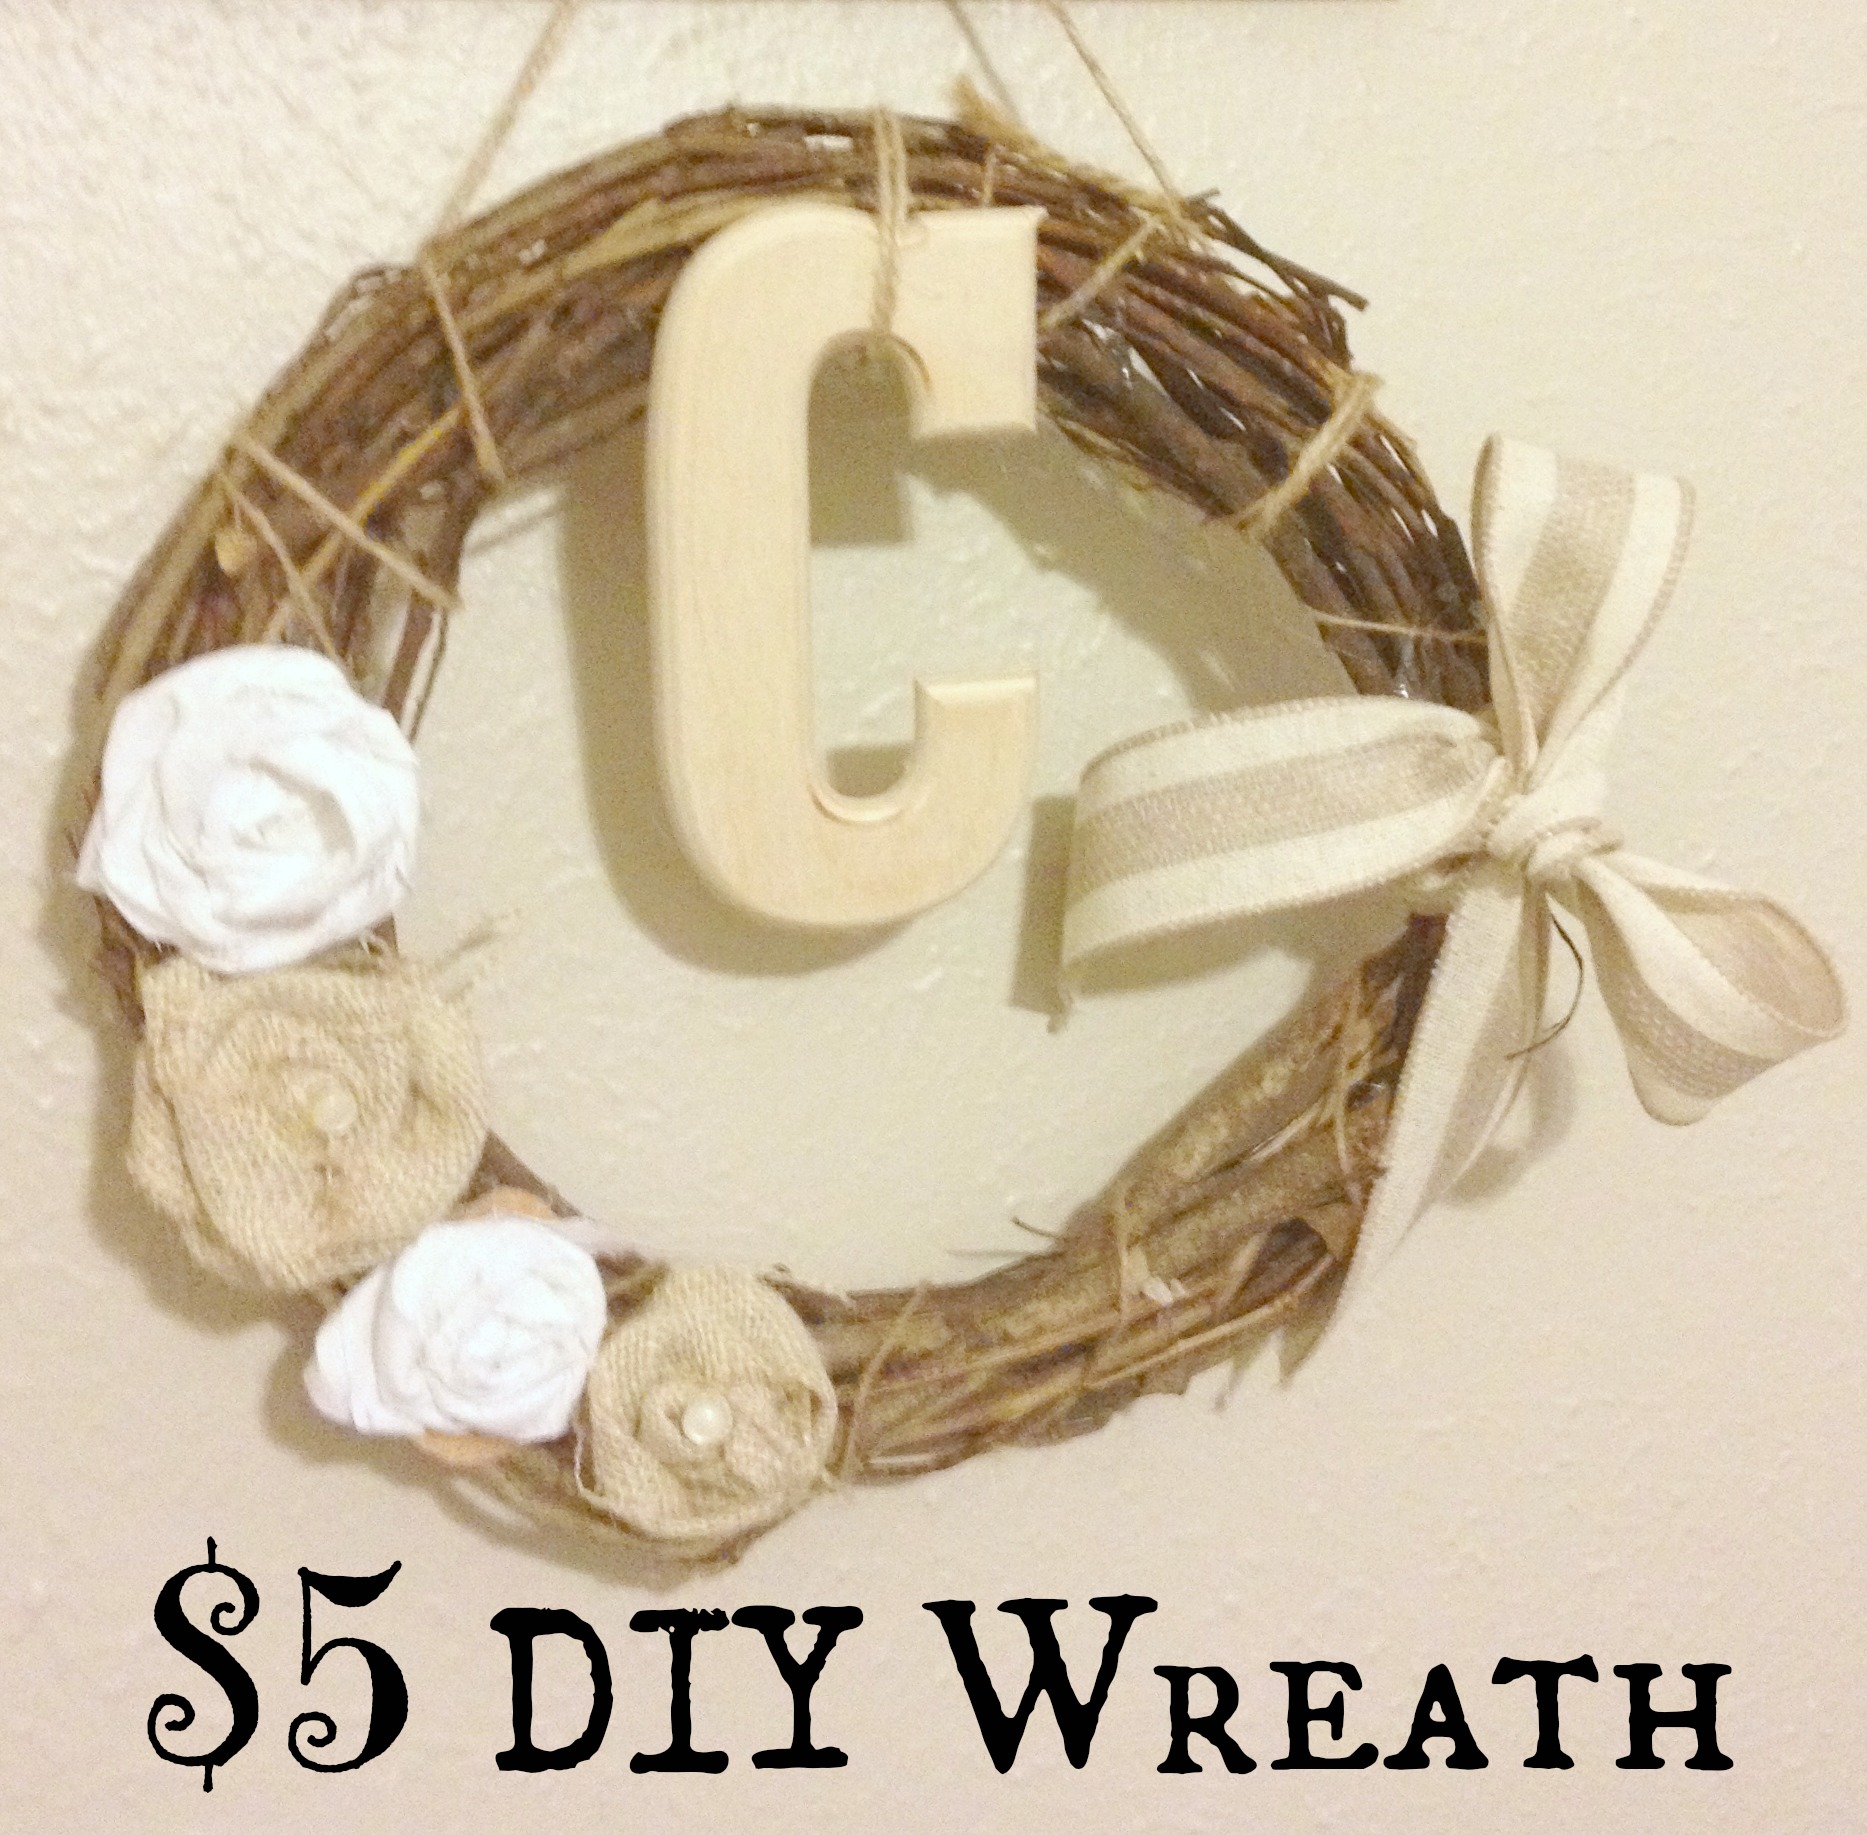 $5 DIY Wreath